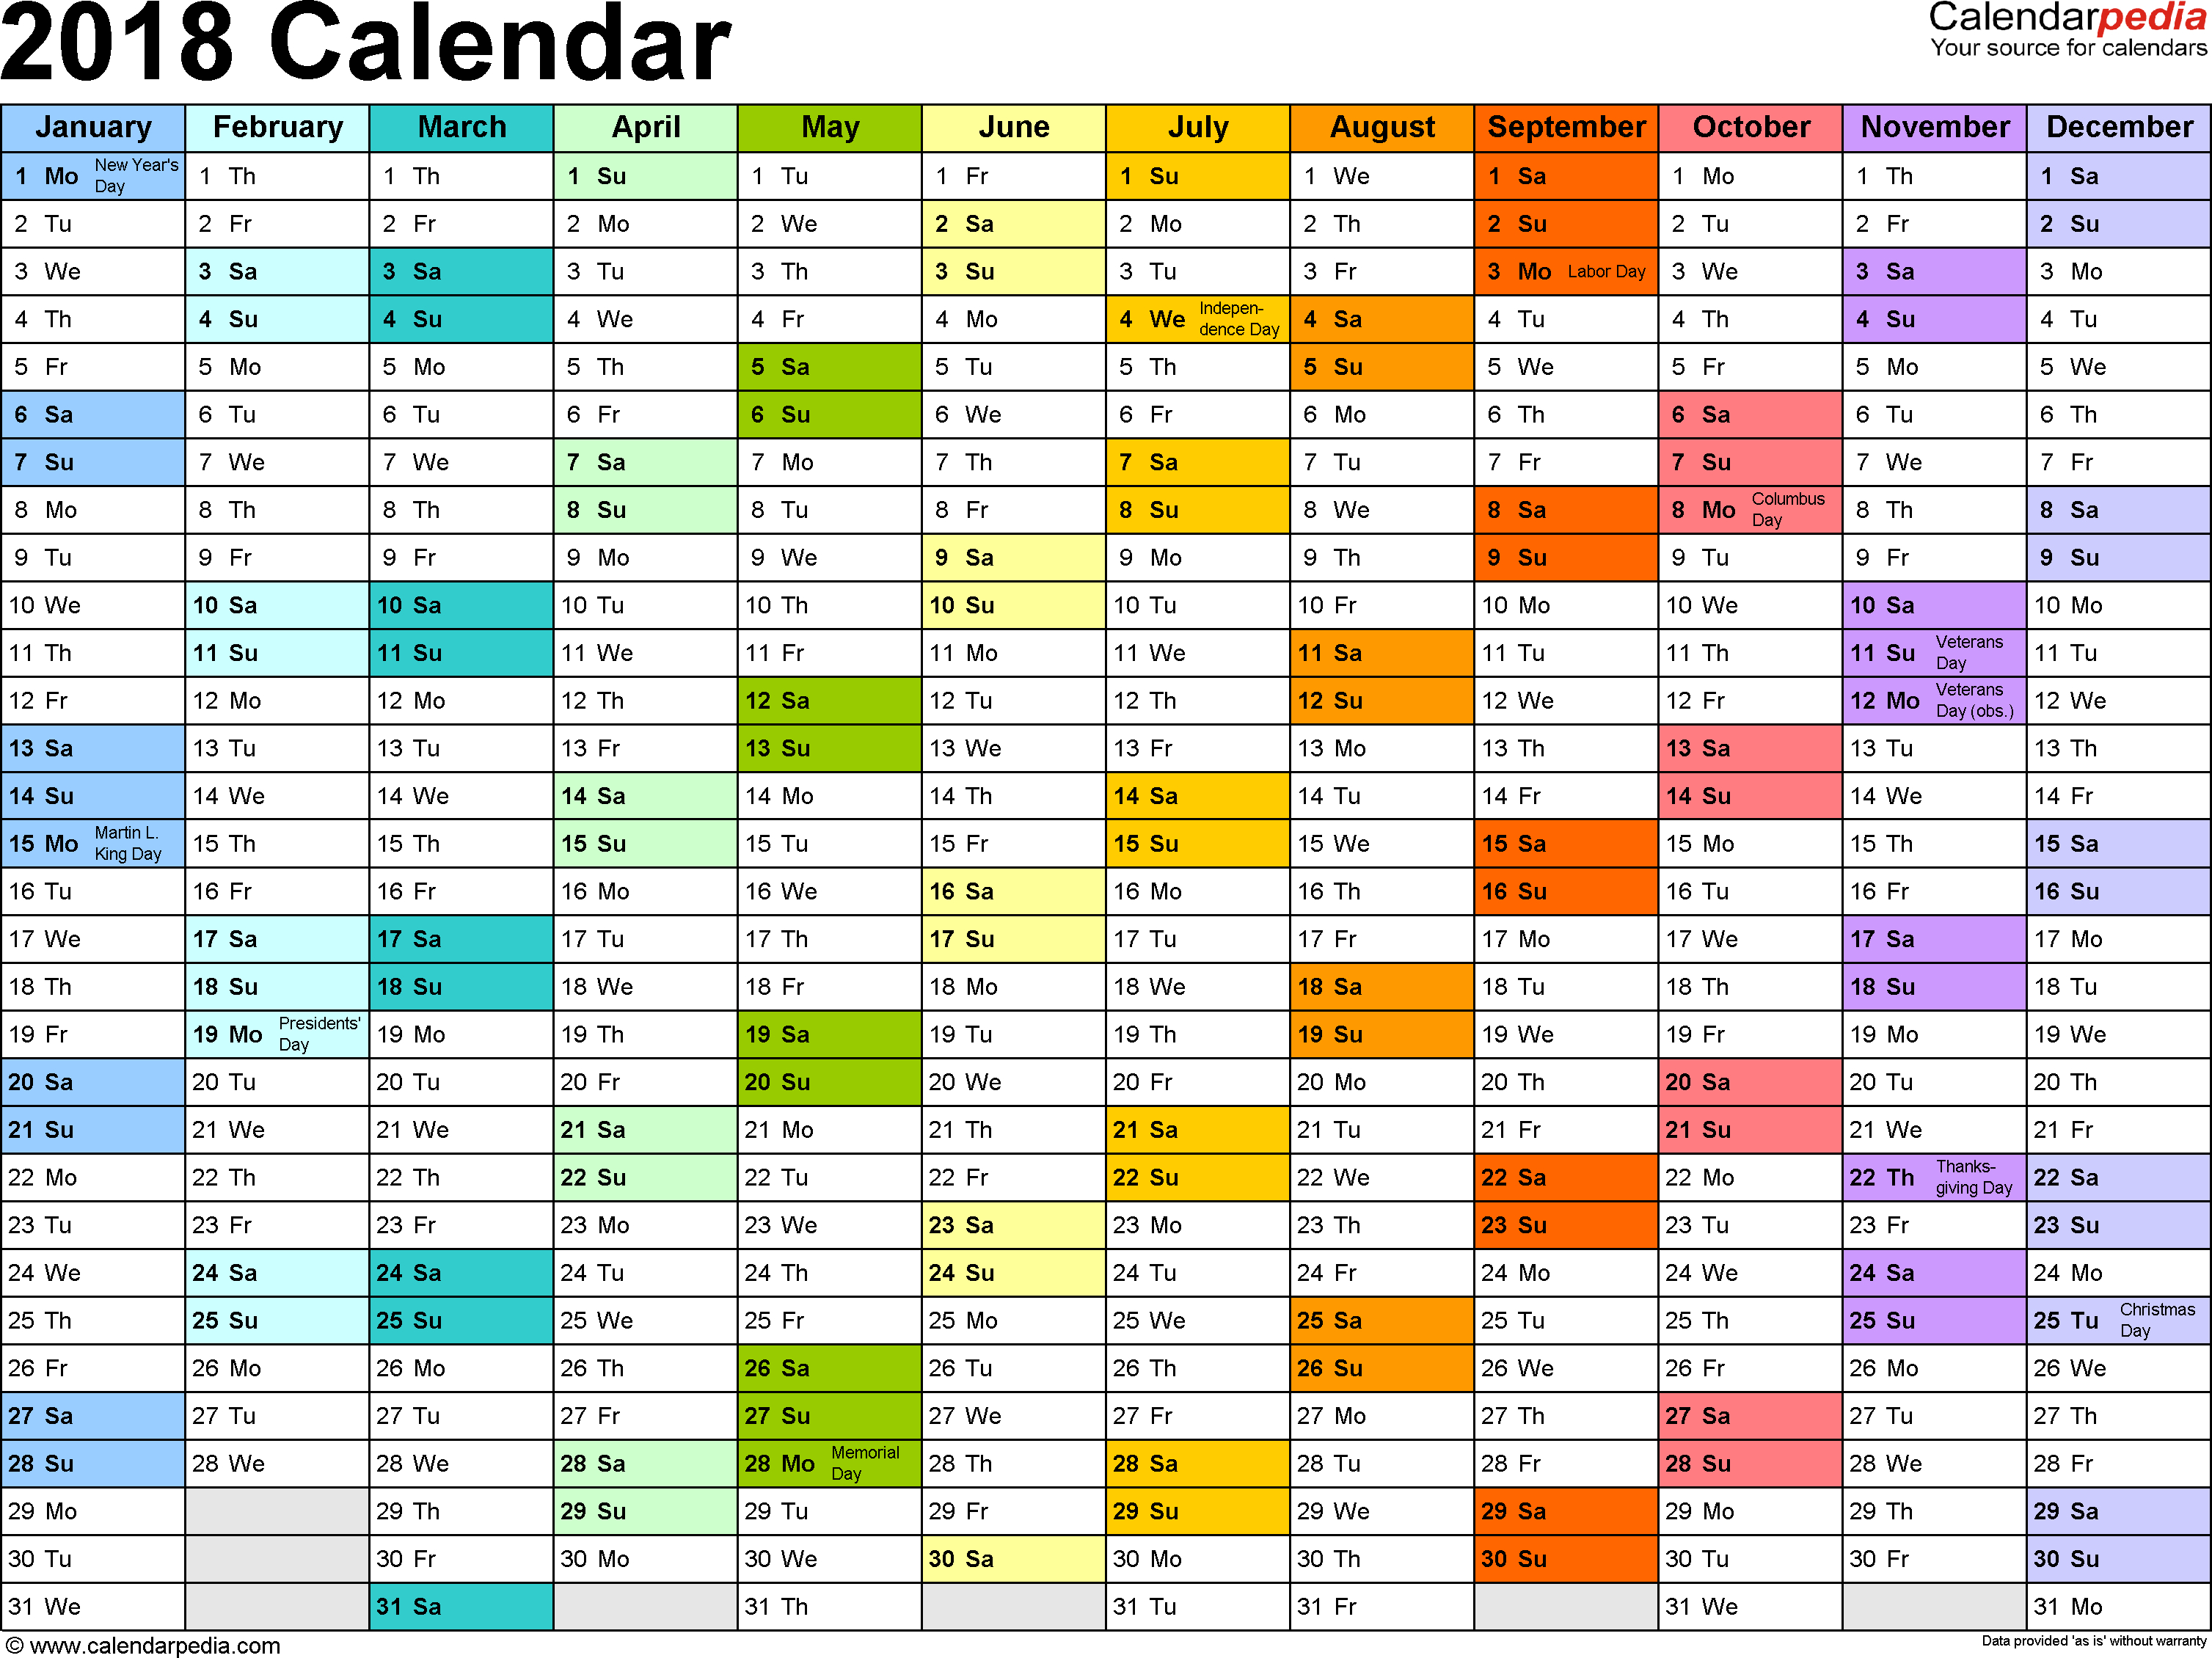 Spreadsheet Calendar Template Within 2018 Calendar  Download 17 Free Printable Excel Templates .xlsx